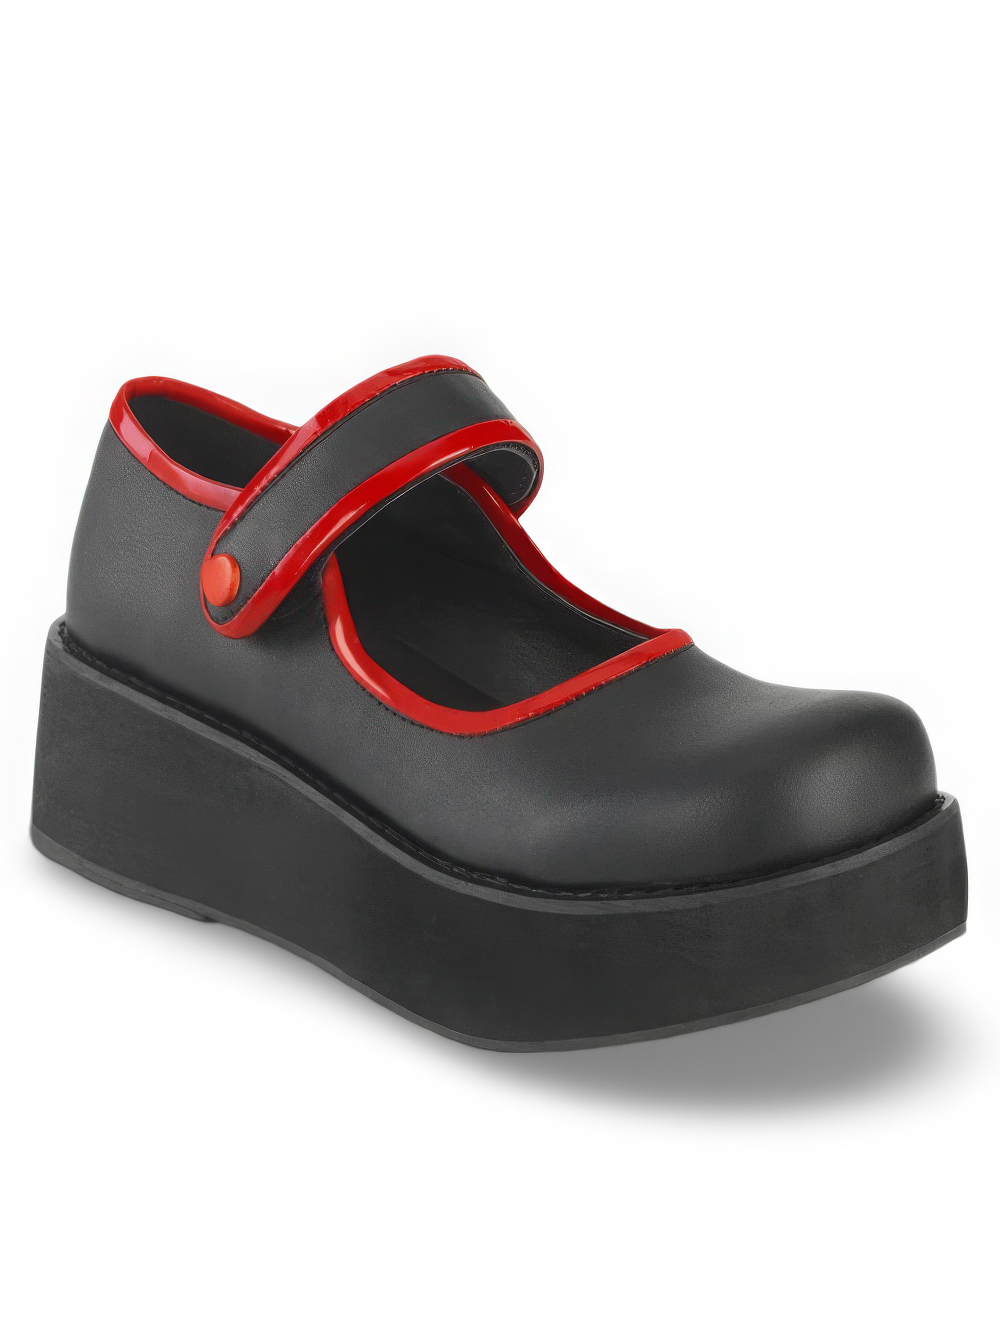 DEMONIA Black Contrast Piped Mary Jane Platform Shoes